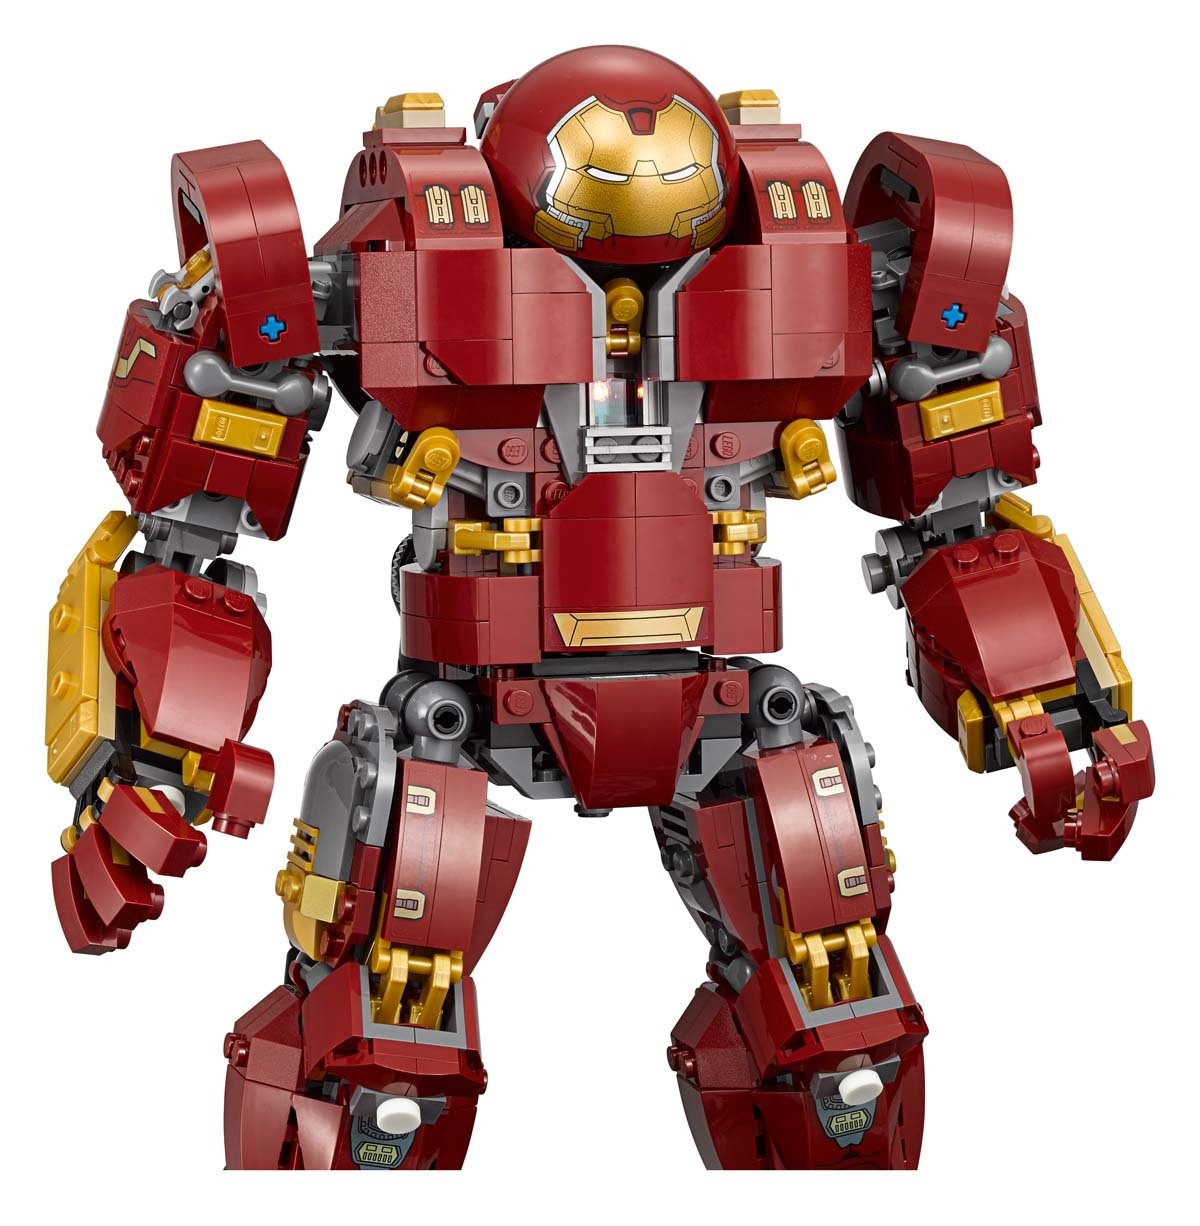 check-out-this-incredibly-cool-iron-man-hulkbuster-lego-playset3.jpeg